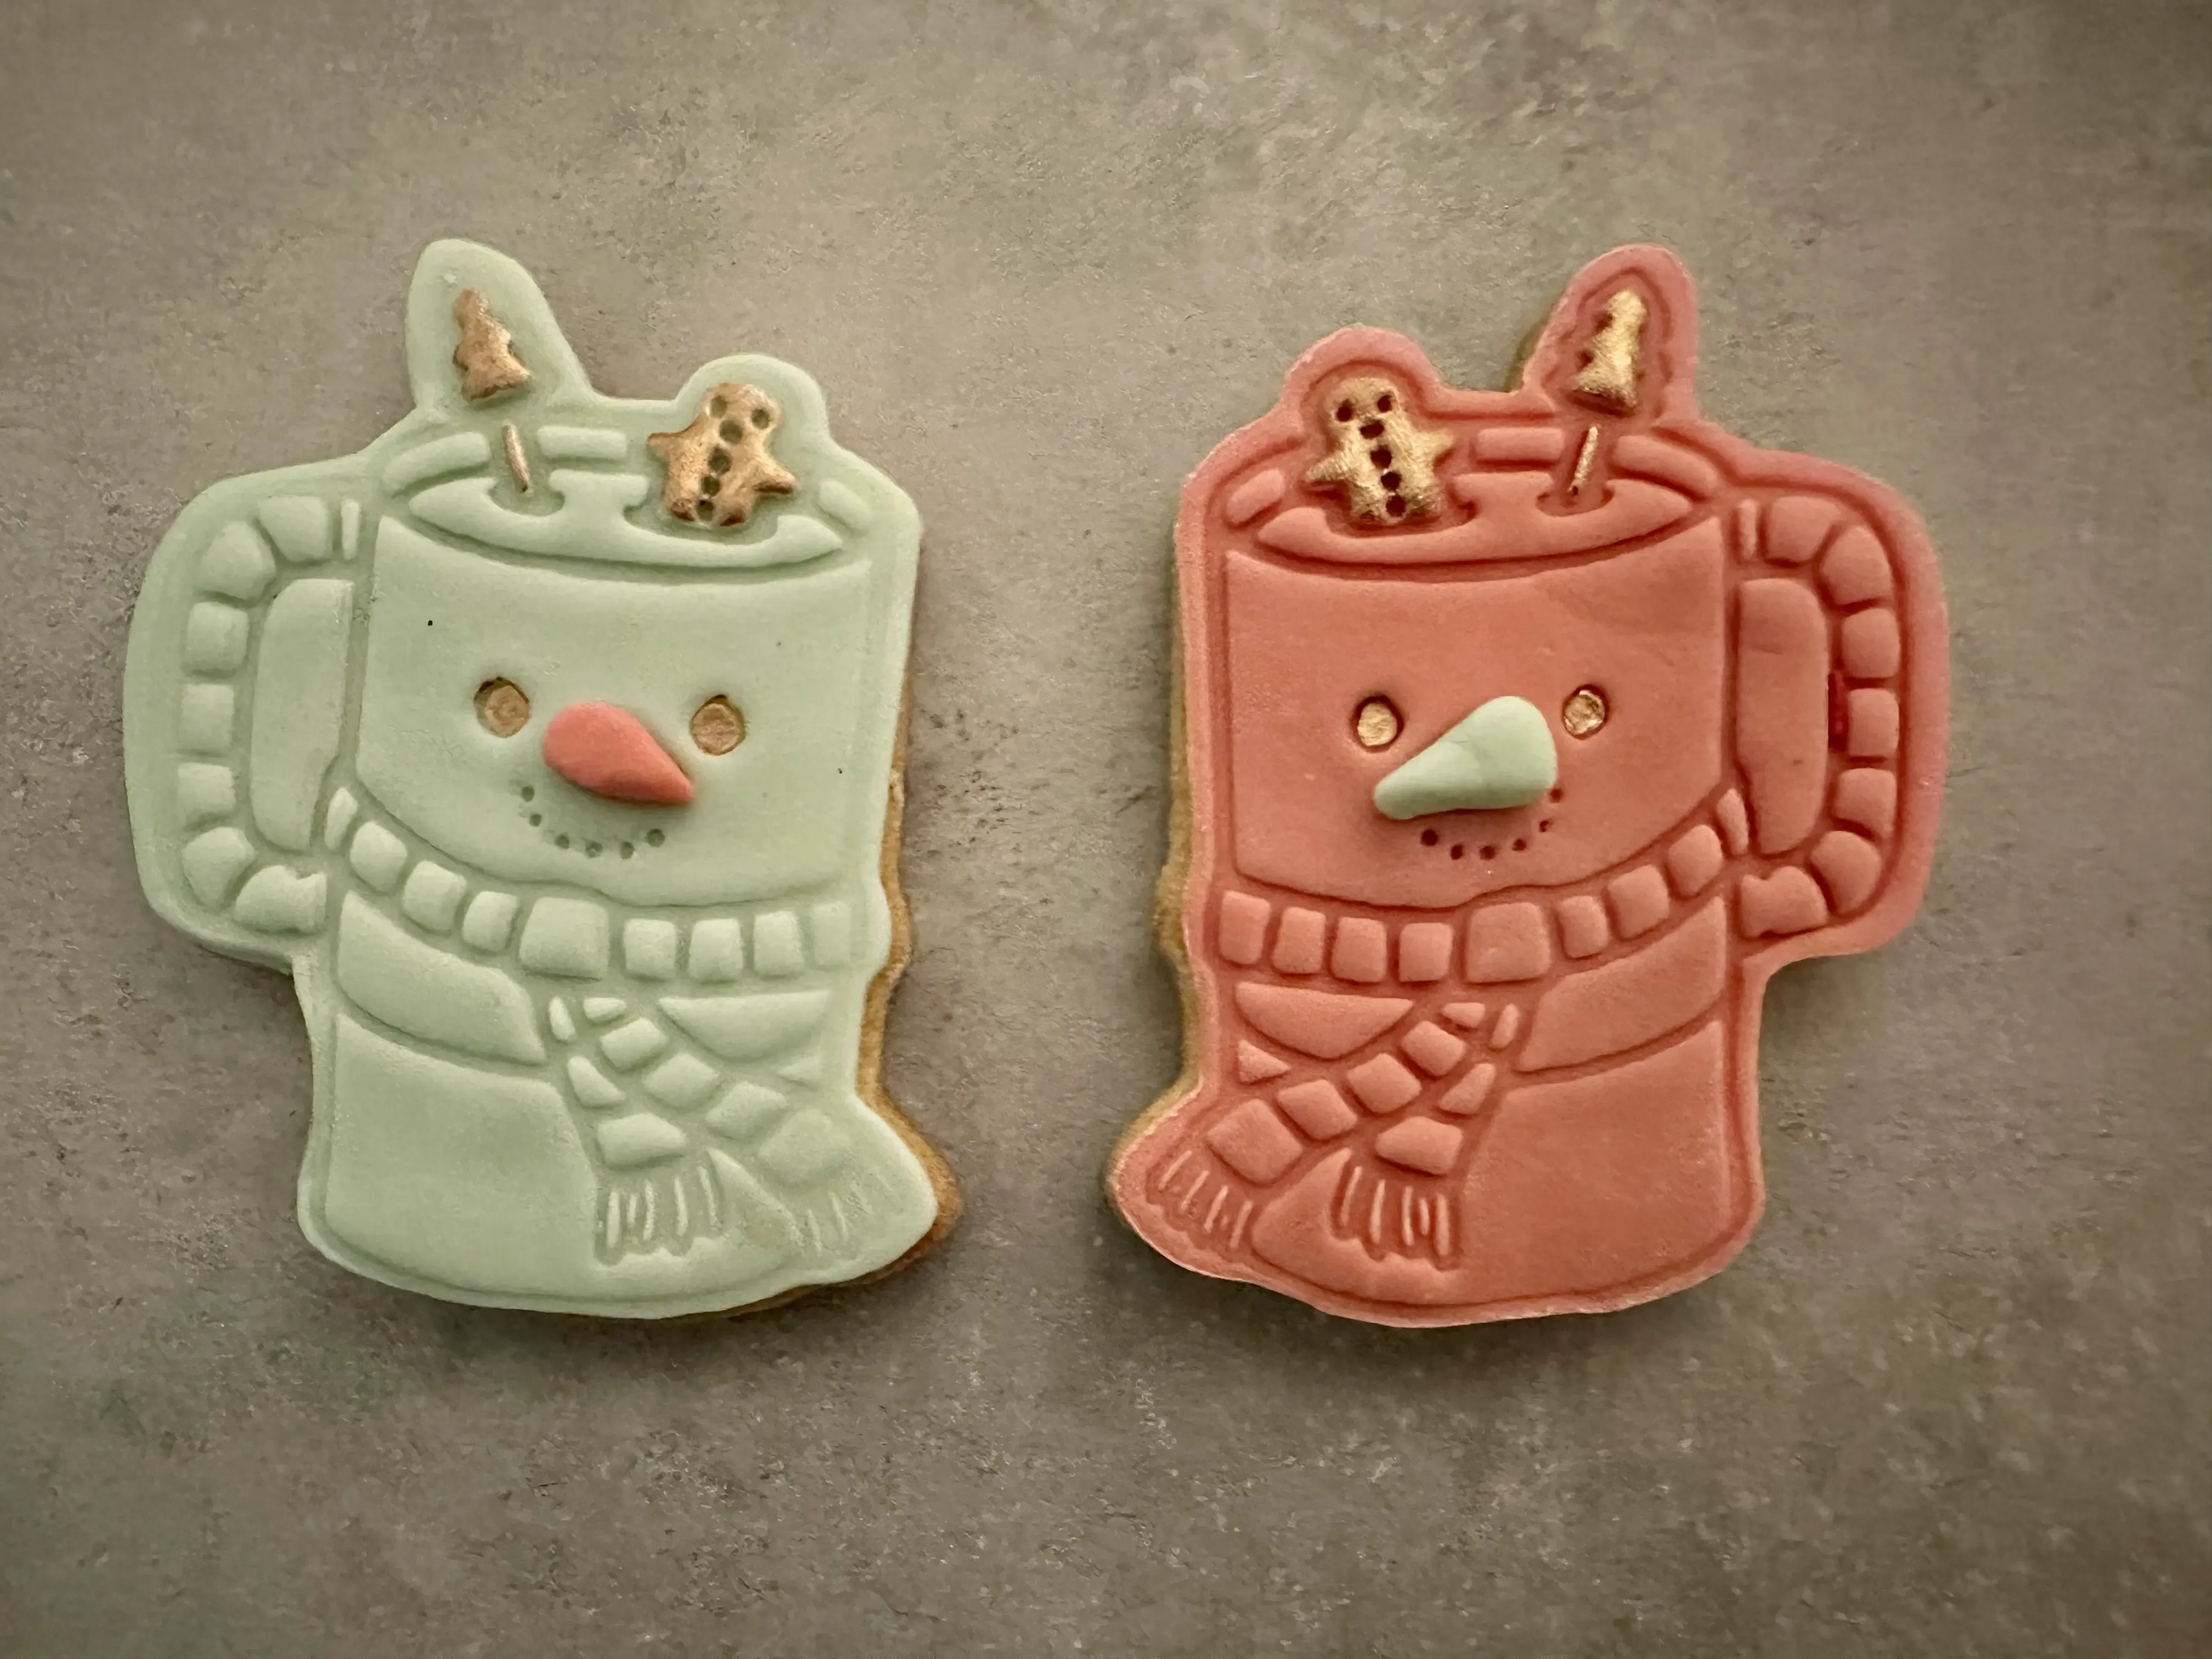 Snowman/Christmas cup cookie/sugar paste cutter